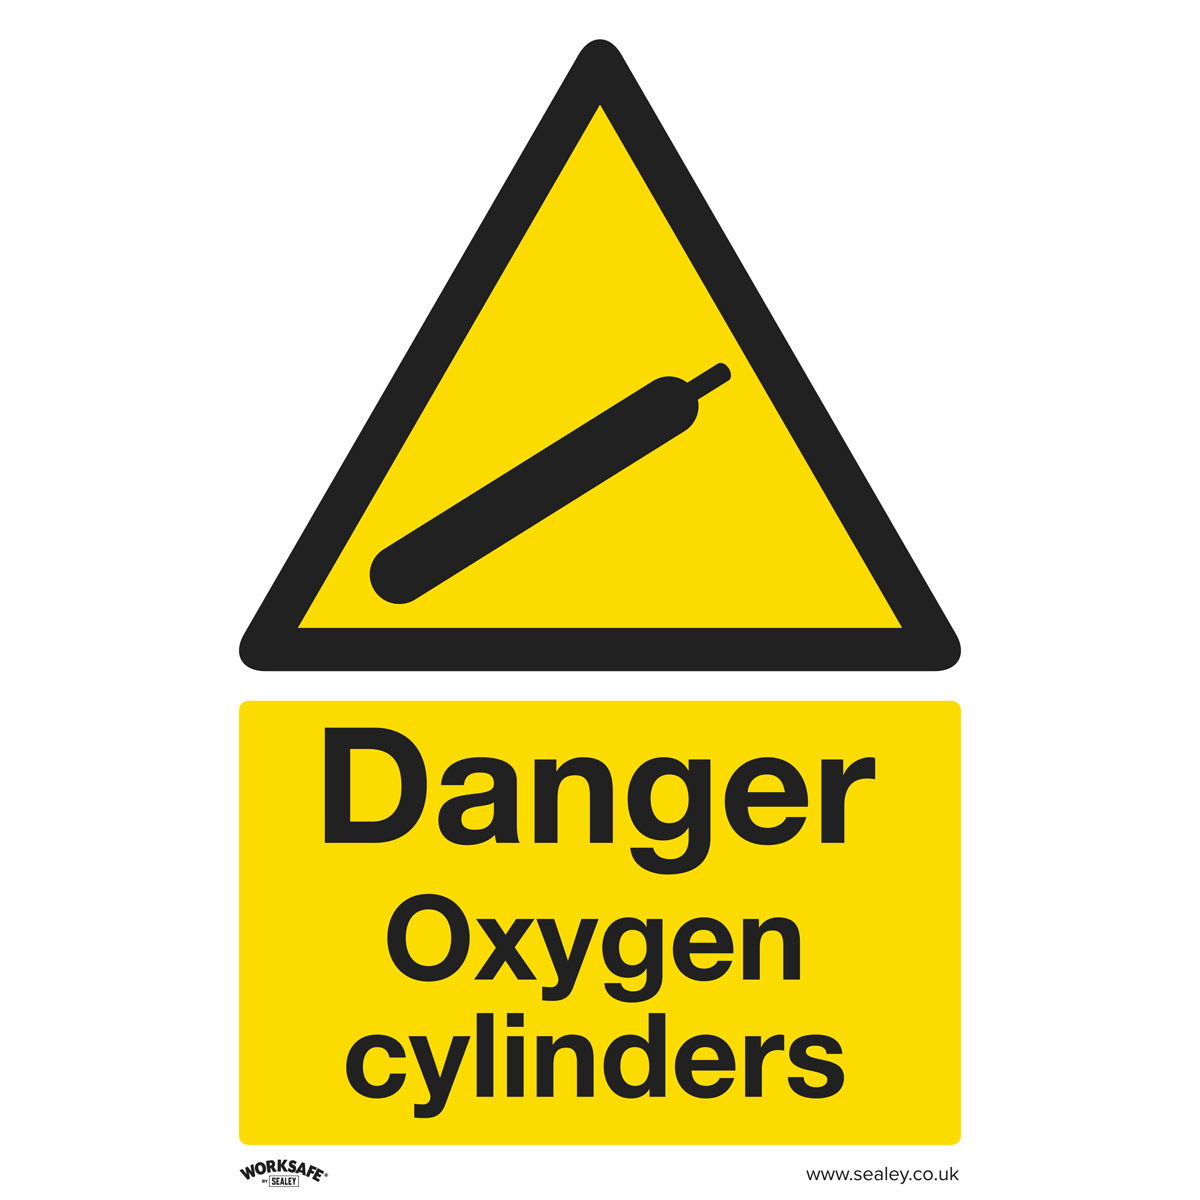 Danger Oxygen Cylinders - Warning Safety Sign - Self-Adhesive Vinyl